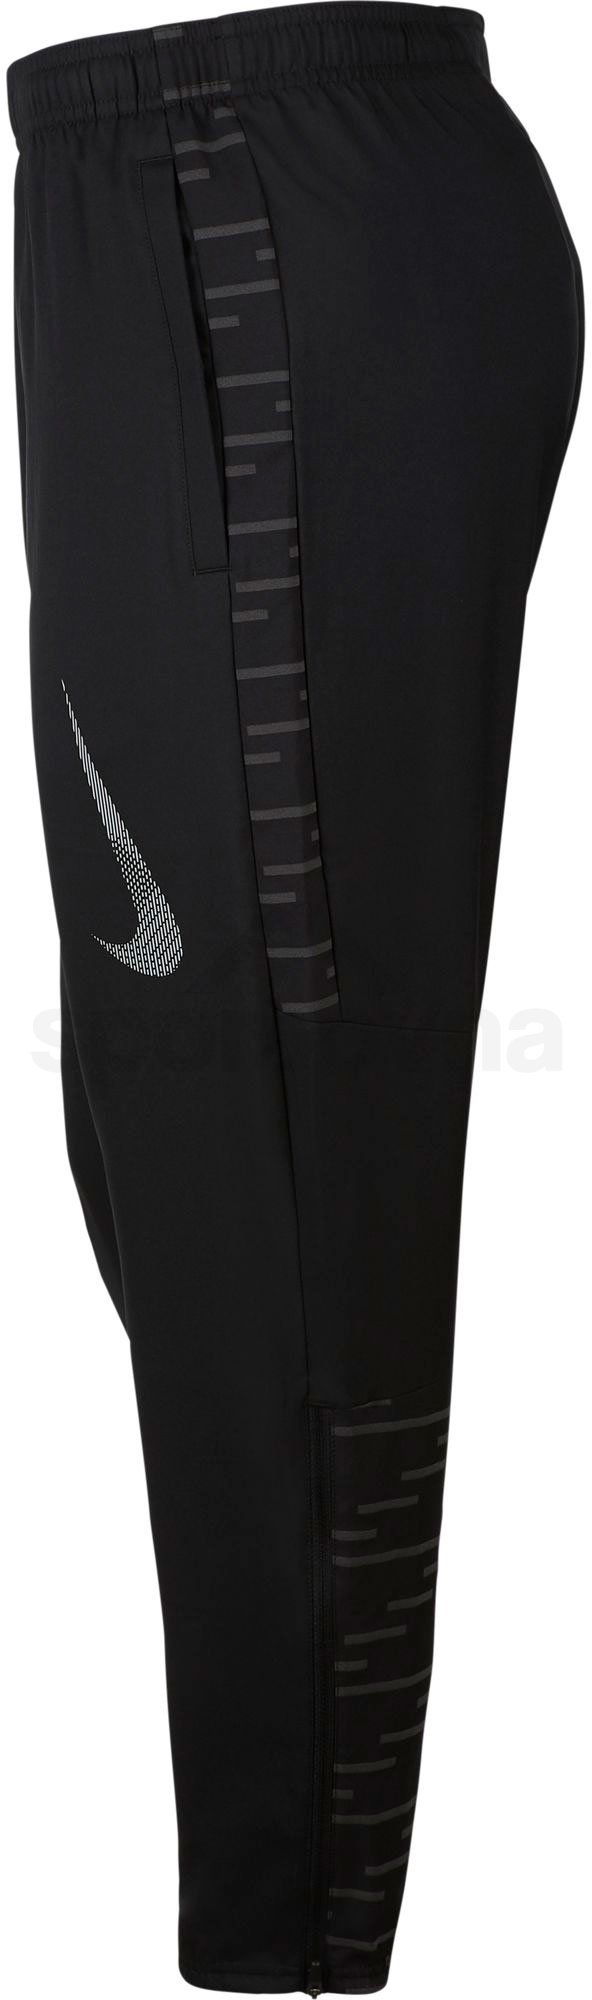 Kalhoty Nike Dri-FIT Run Division Challenger M - černá